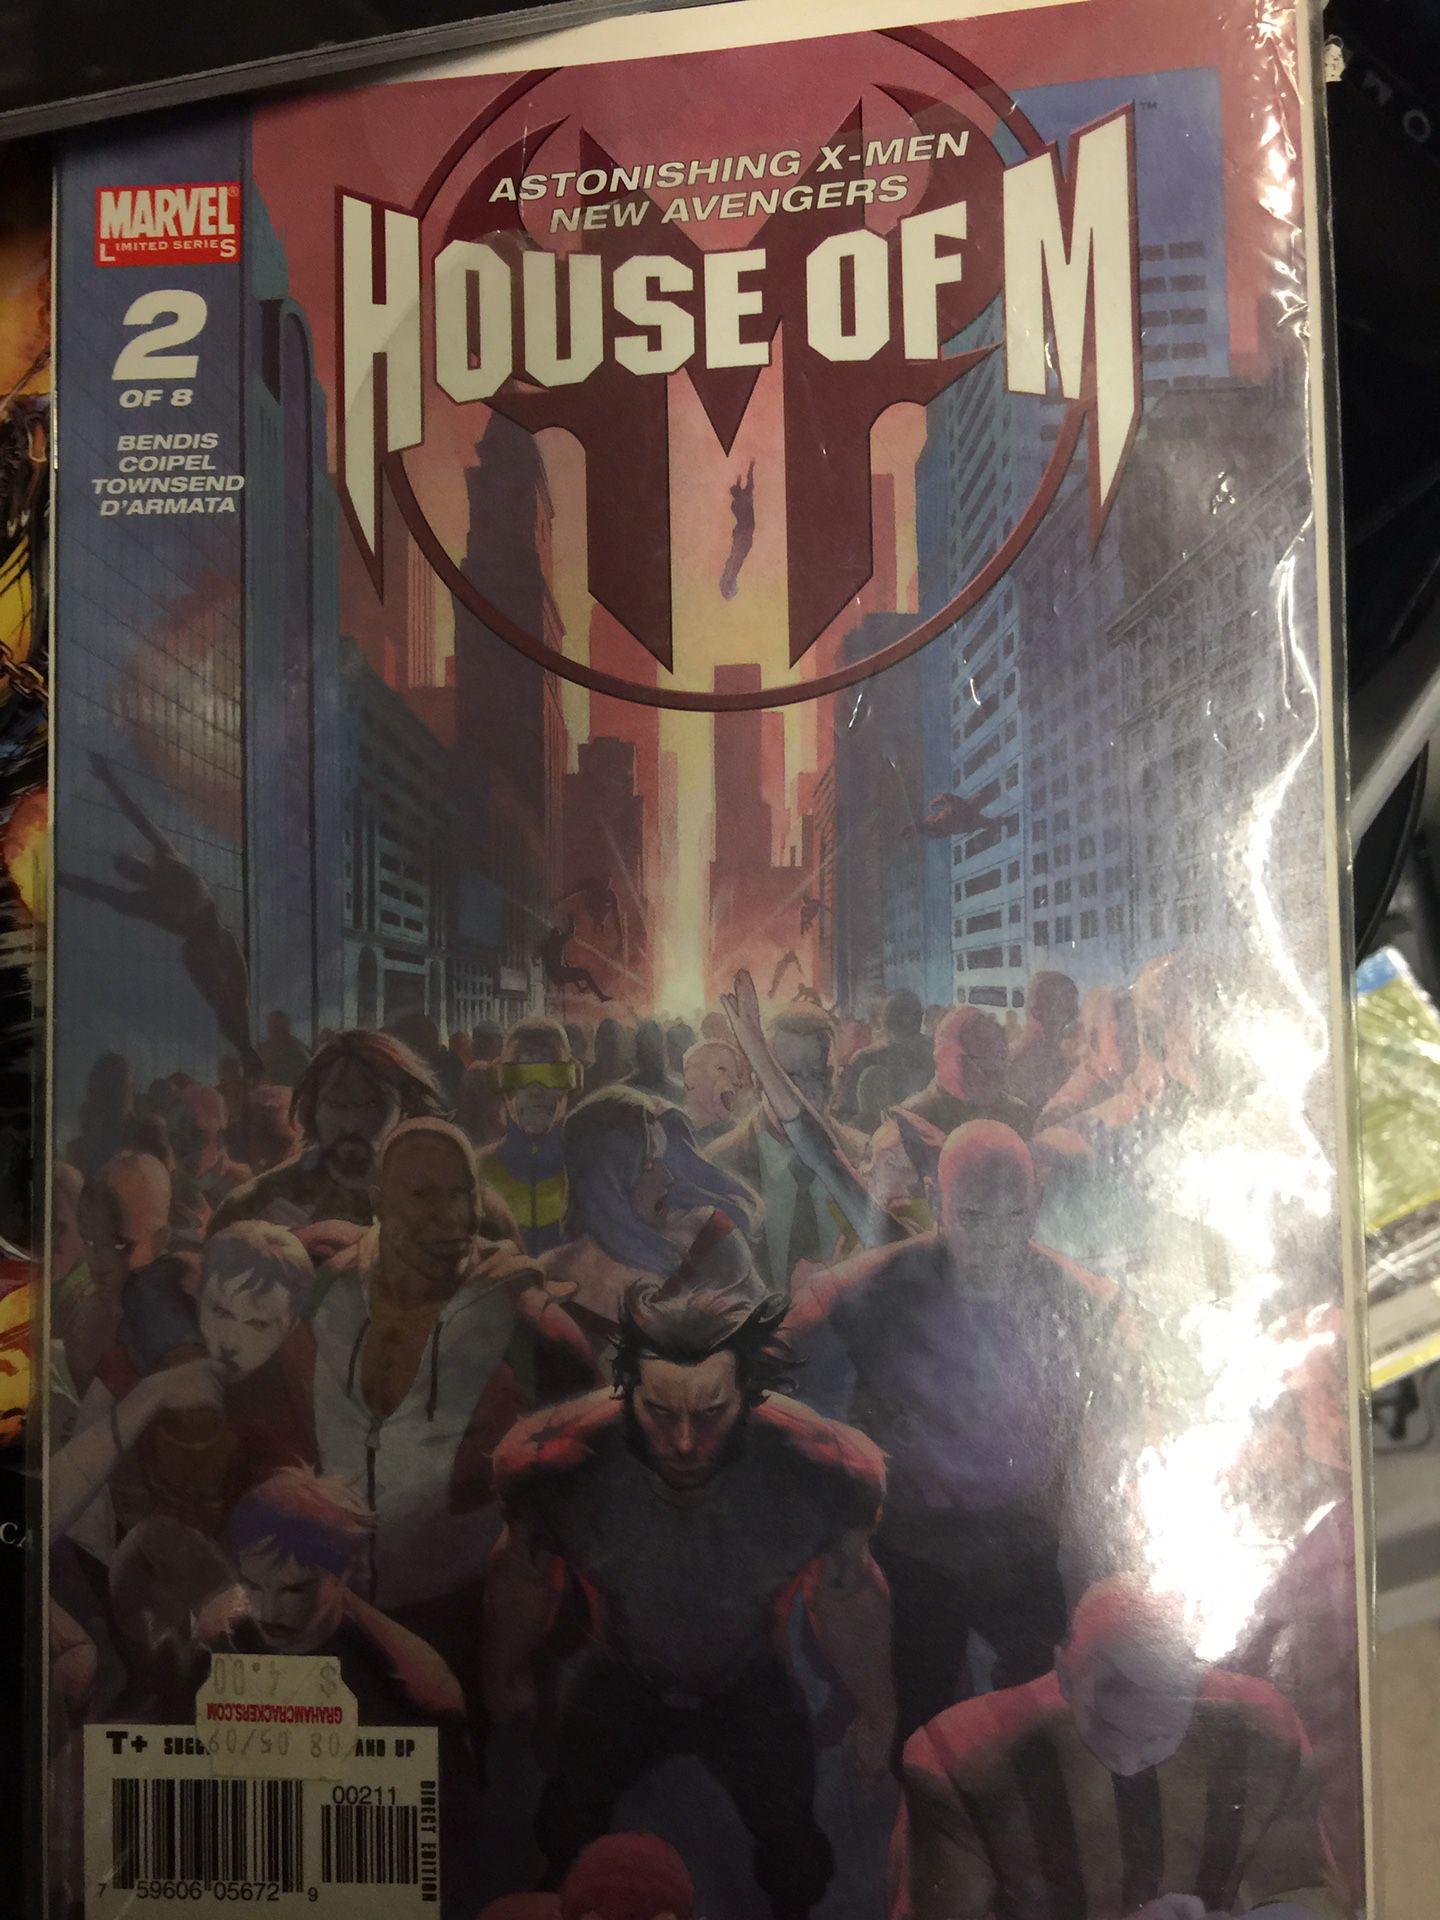 X-men House of M Comic Book 1,2&3 in series.